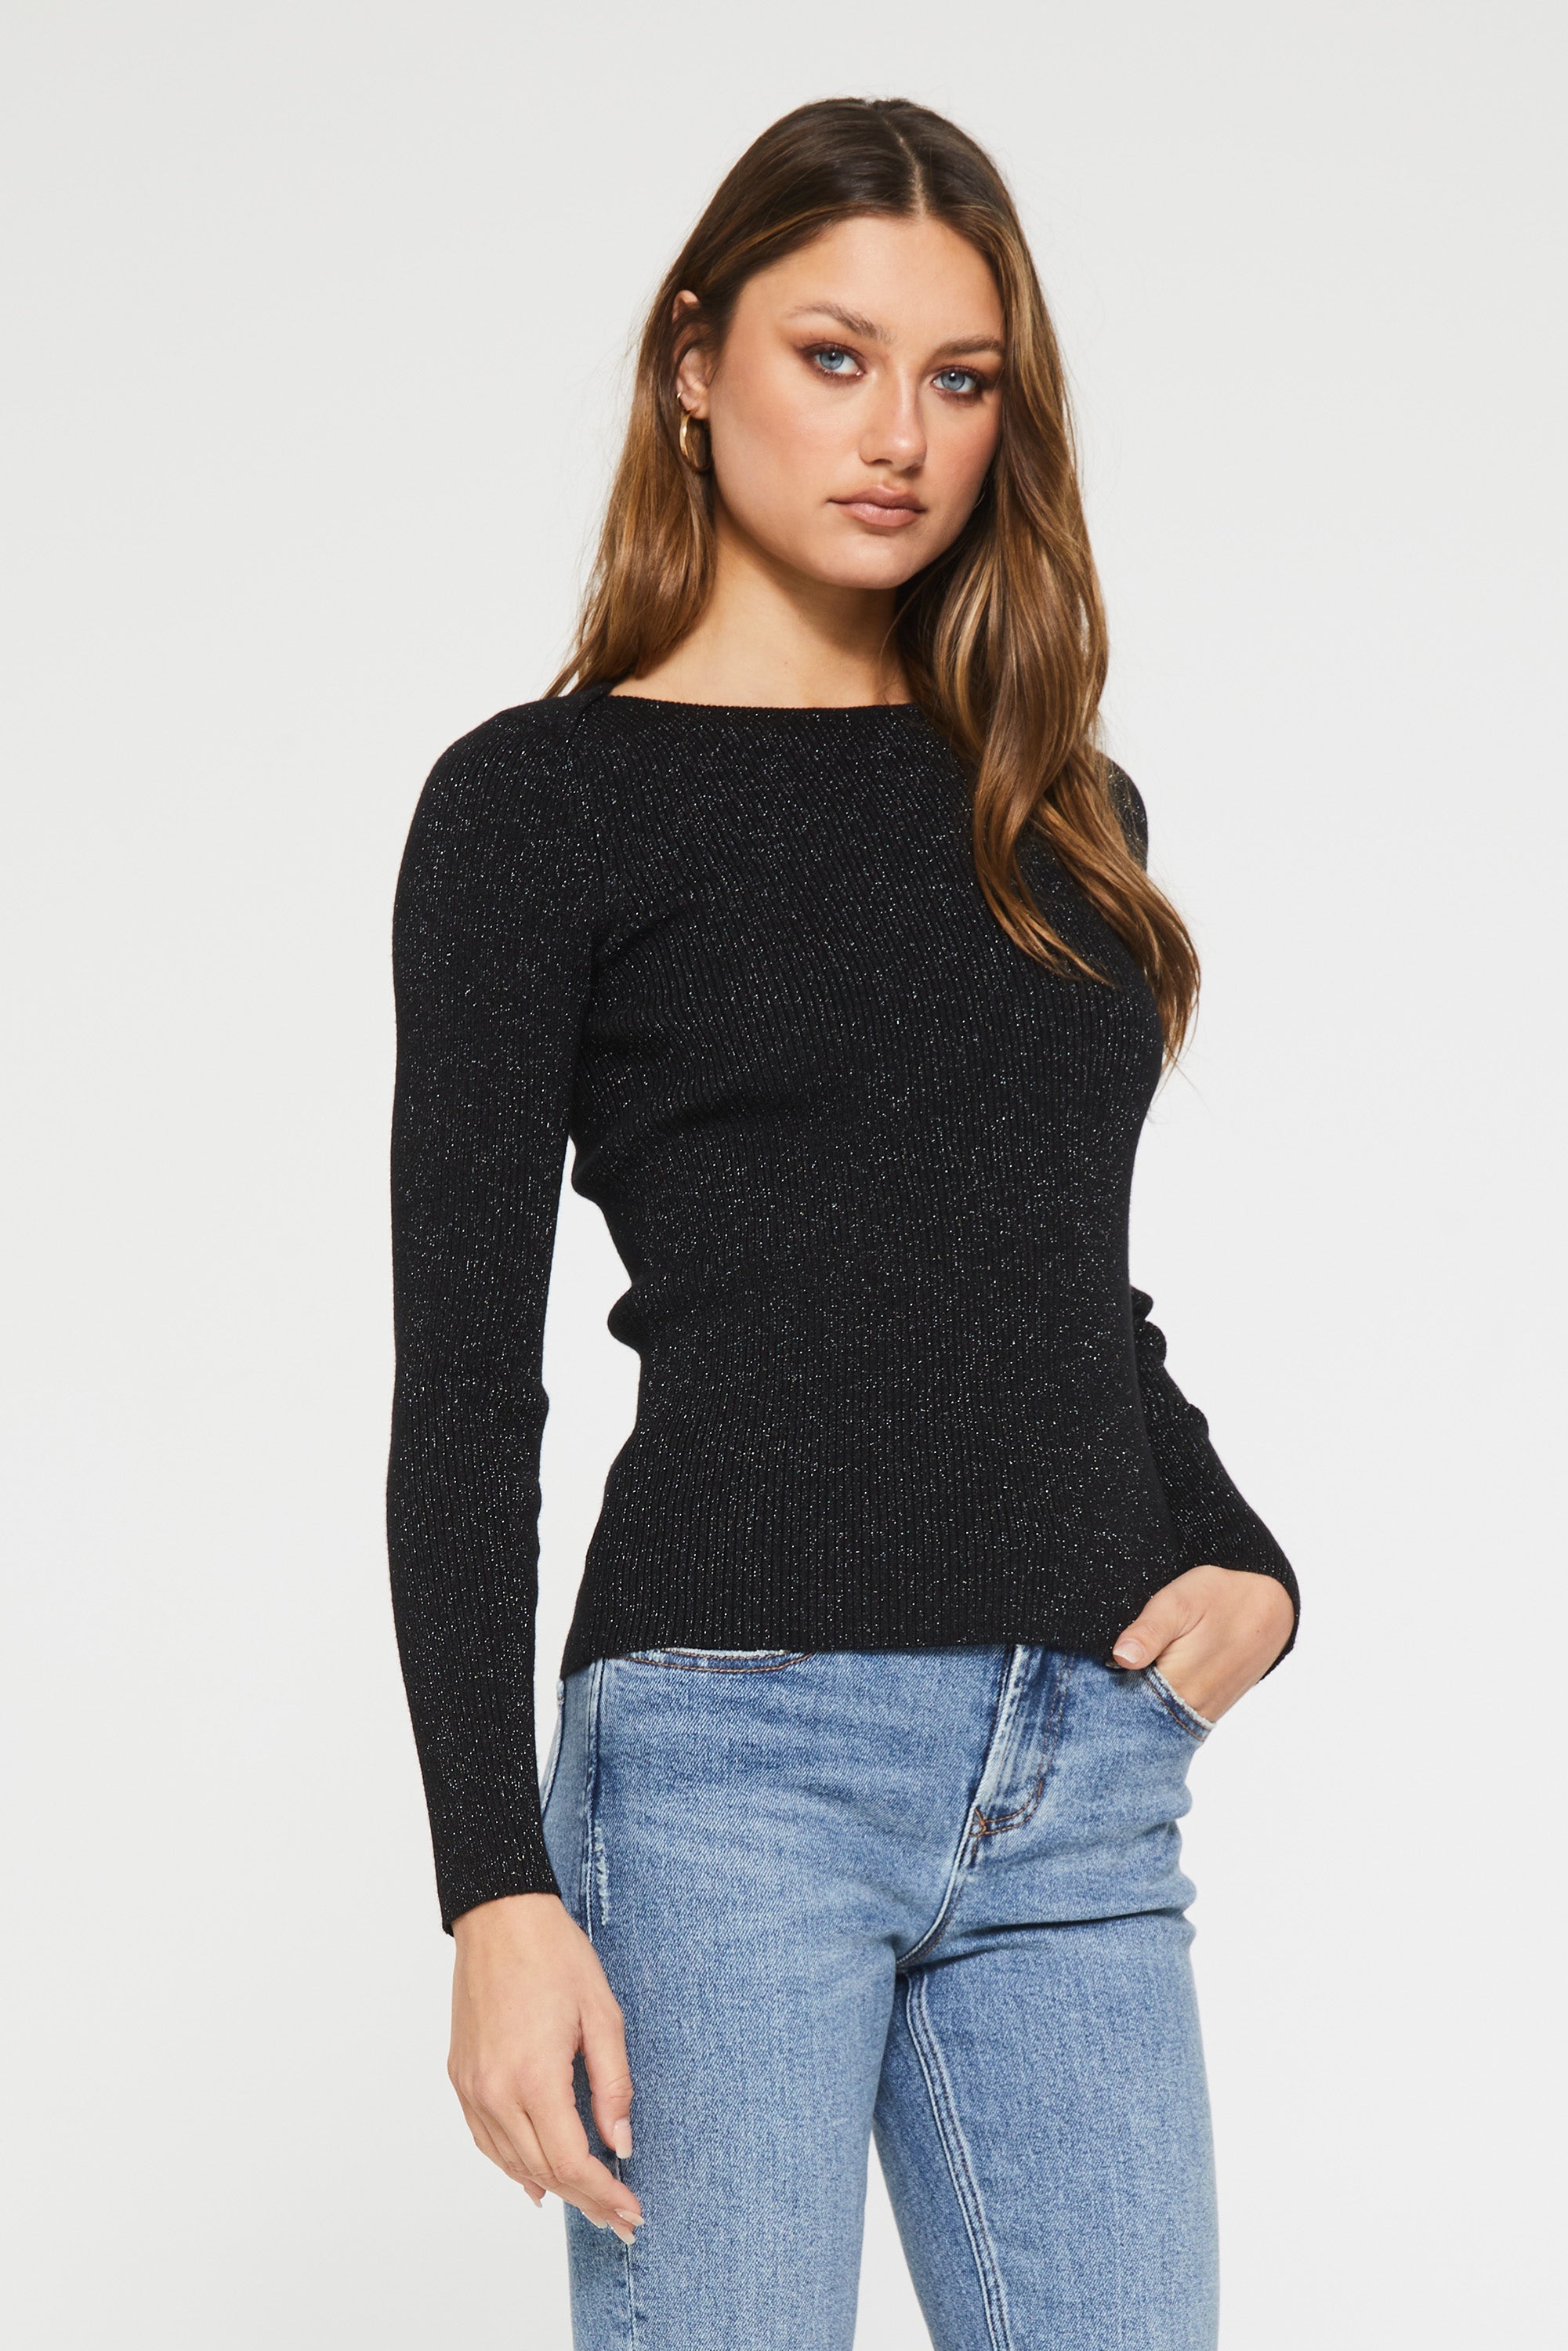 sulema-overlap-shoulder-sweater-black-side-image-another-love-clothing